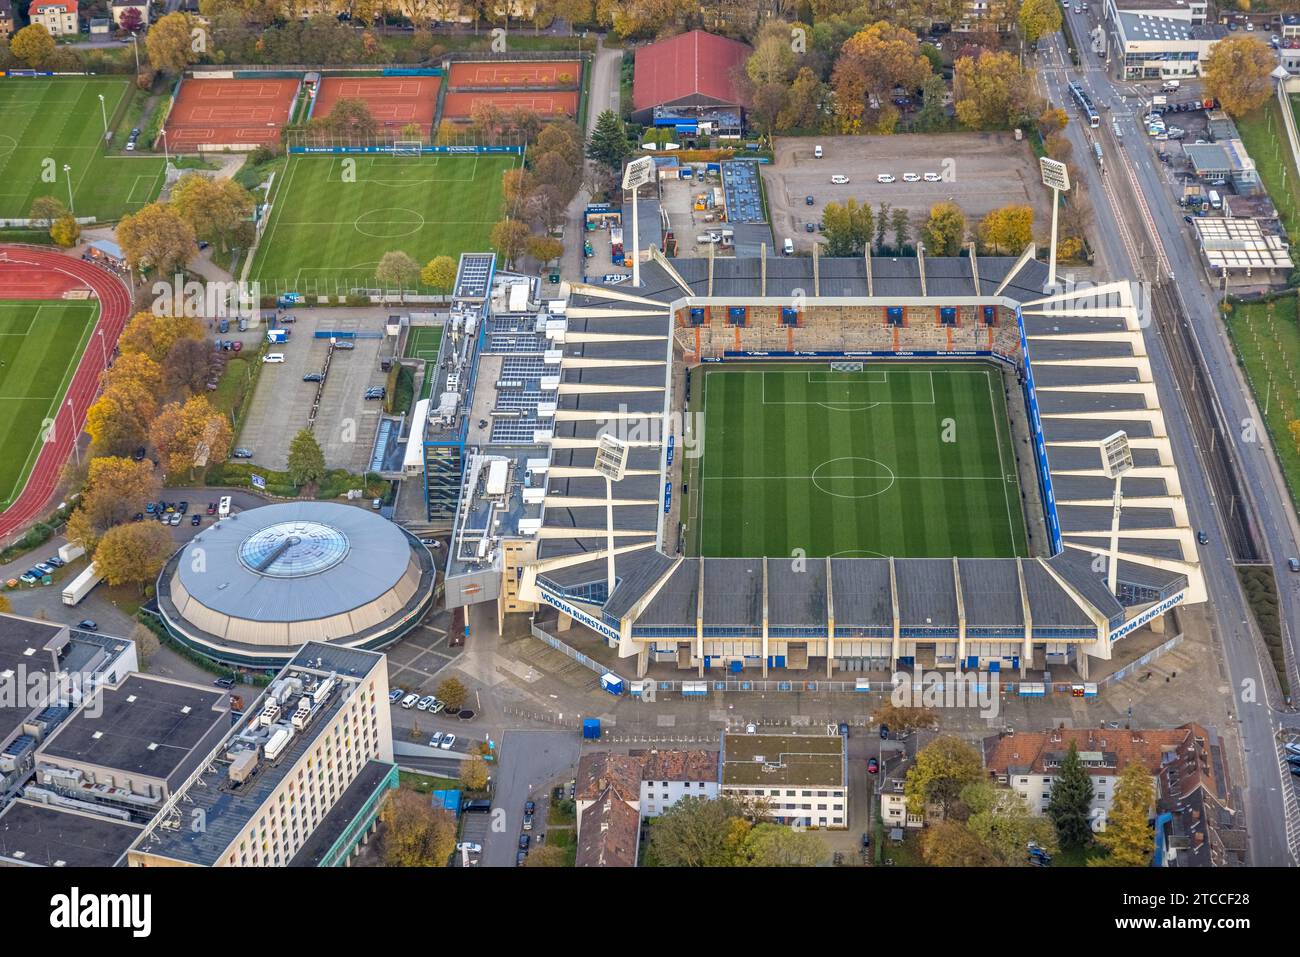 Aerial view, Bundesliga stadium Vonovia Ruhrstadion soccer ground of VfL Bochum 1848 with floodlight masts, round sports hall and training sports fiel Stock Photo